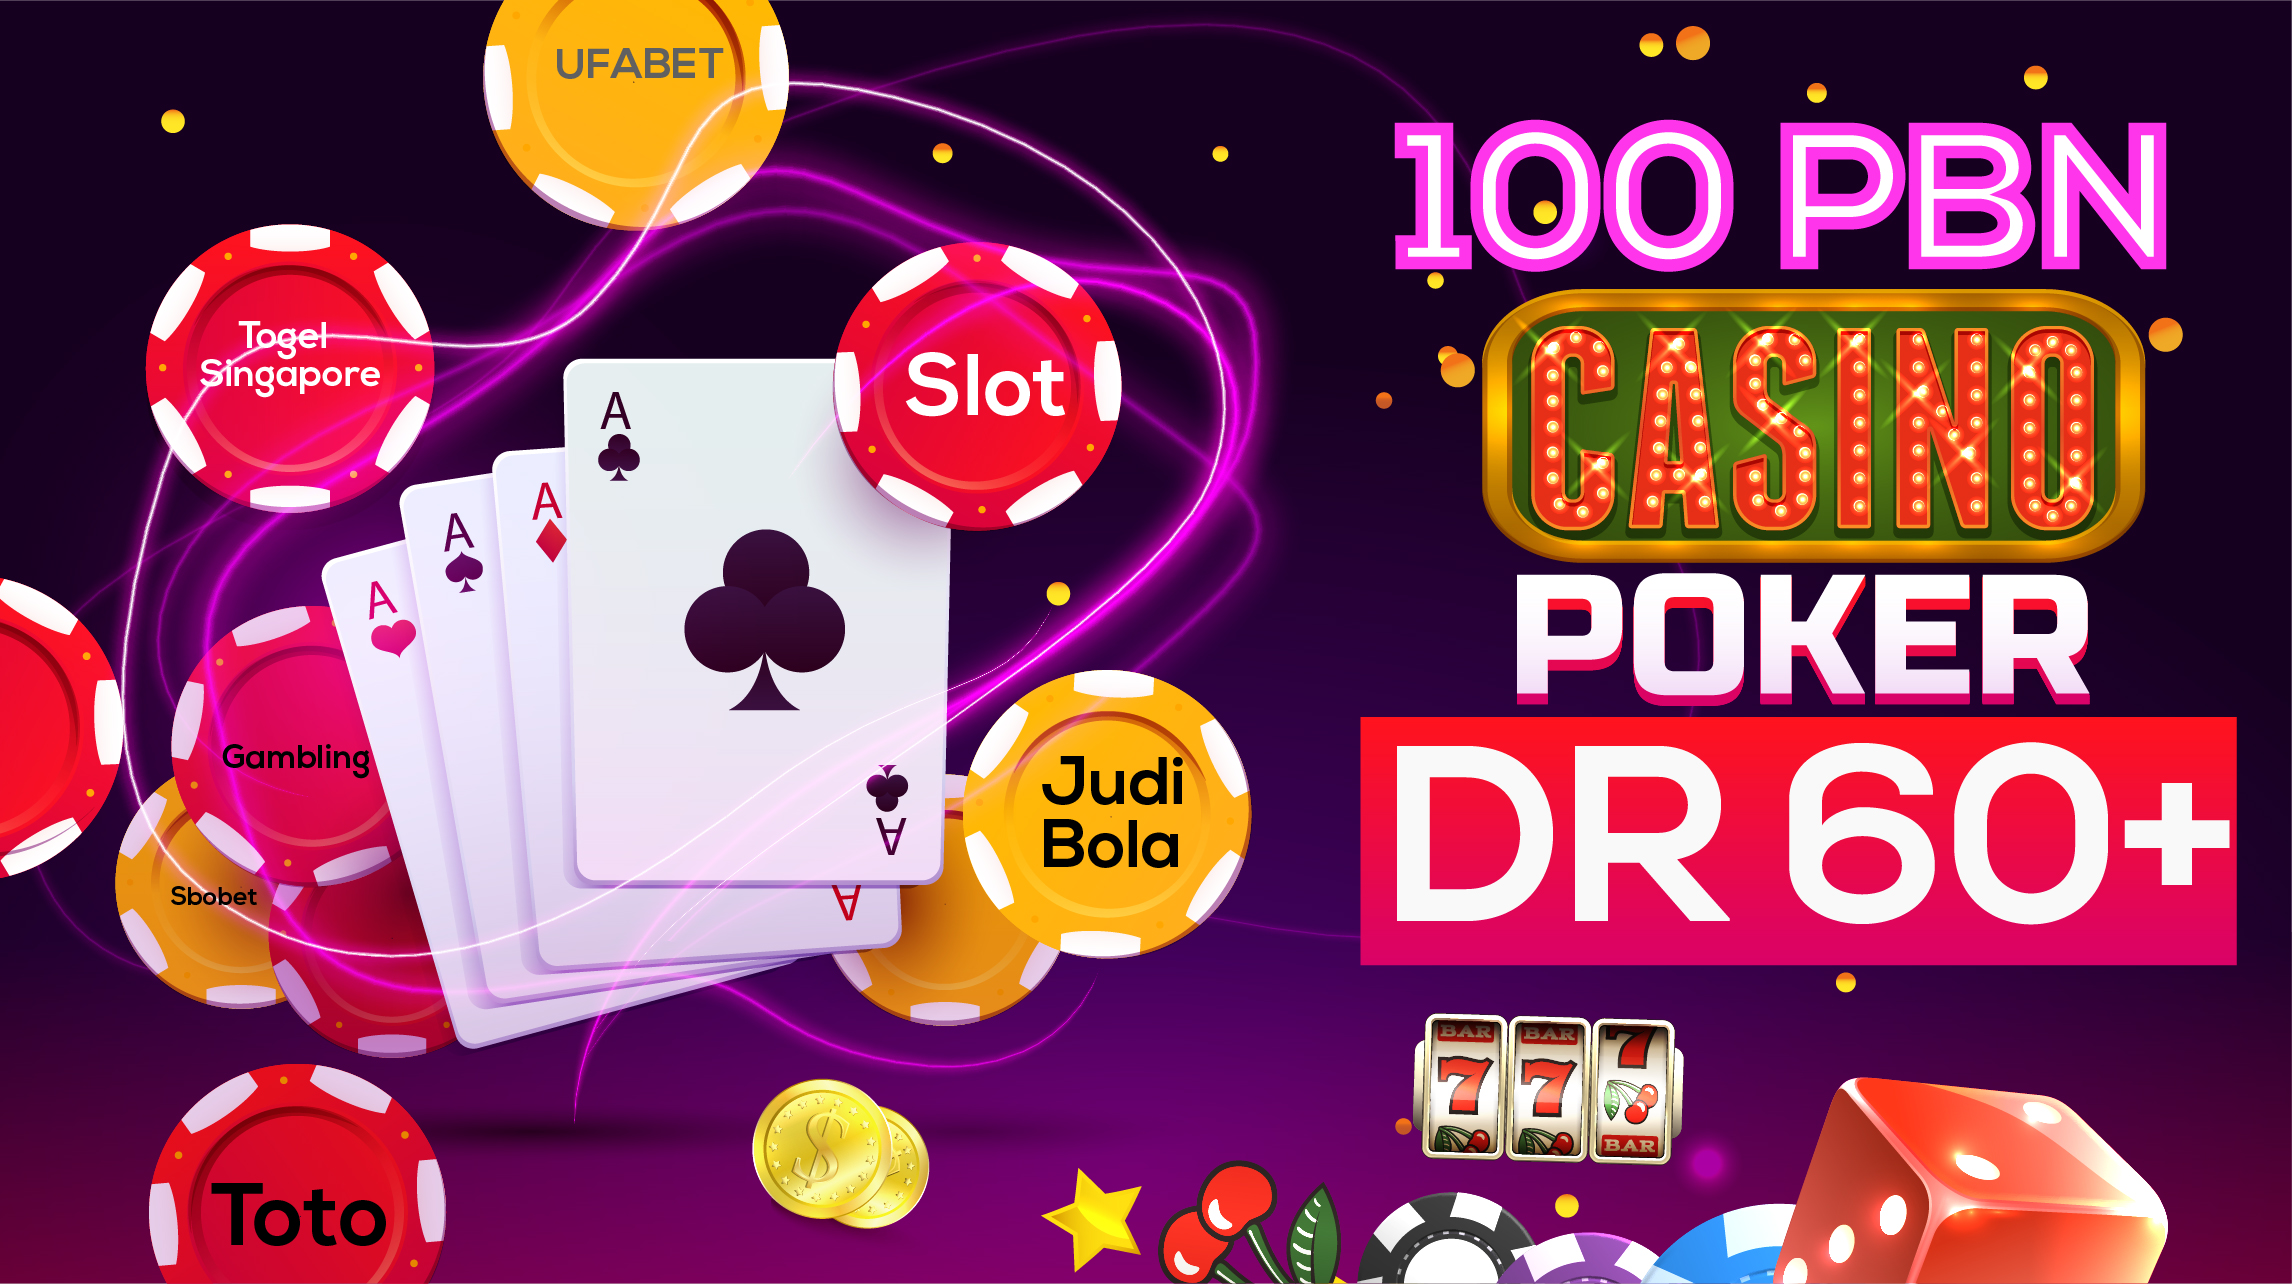 Boost your website 100 PBN DR 60+ Casino, Poker, Ufabet, Slot, Judi bola, Toto all gambling website